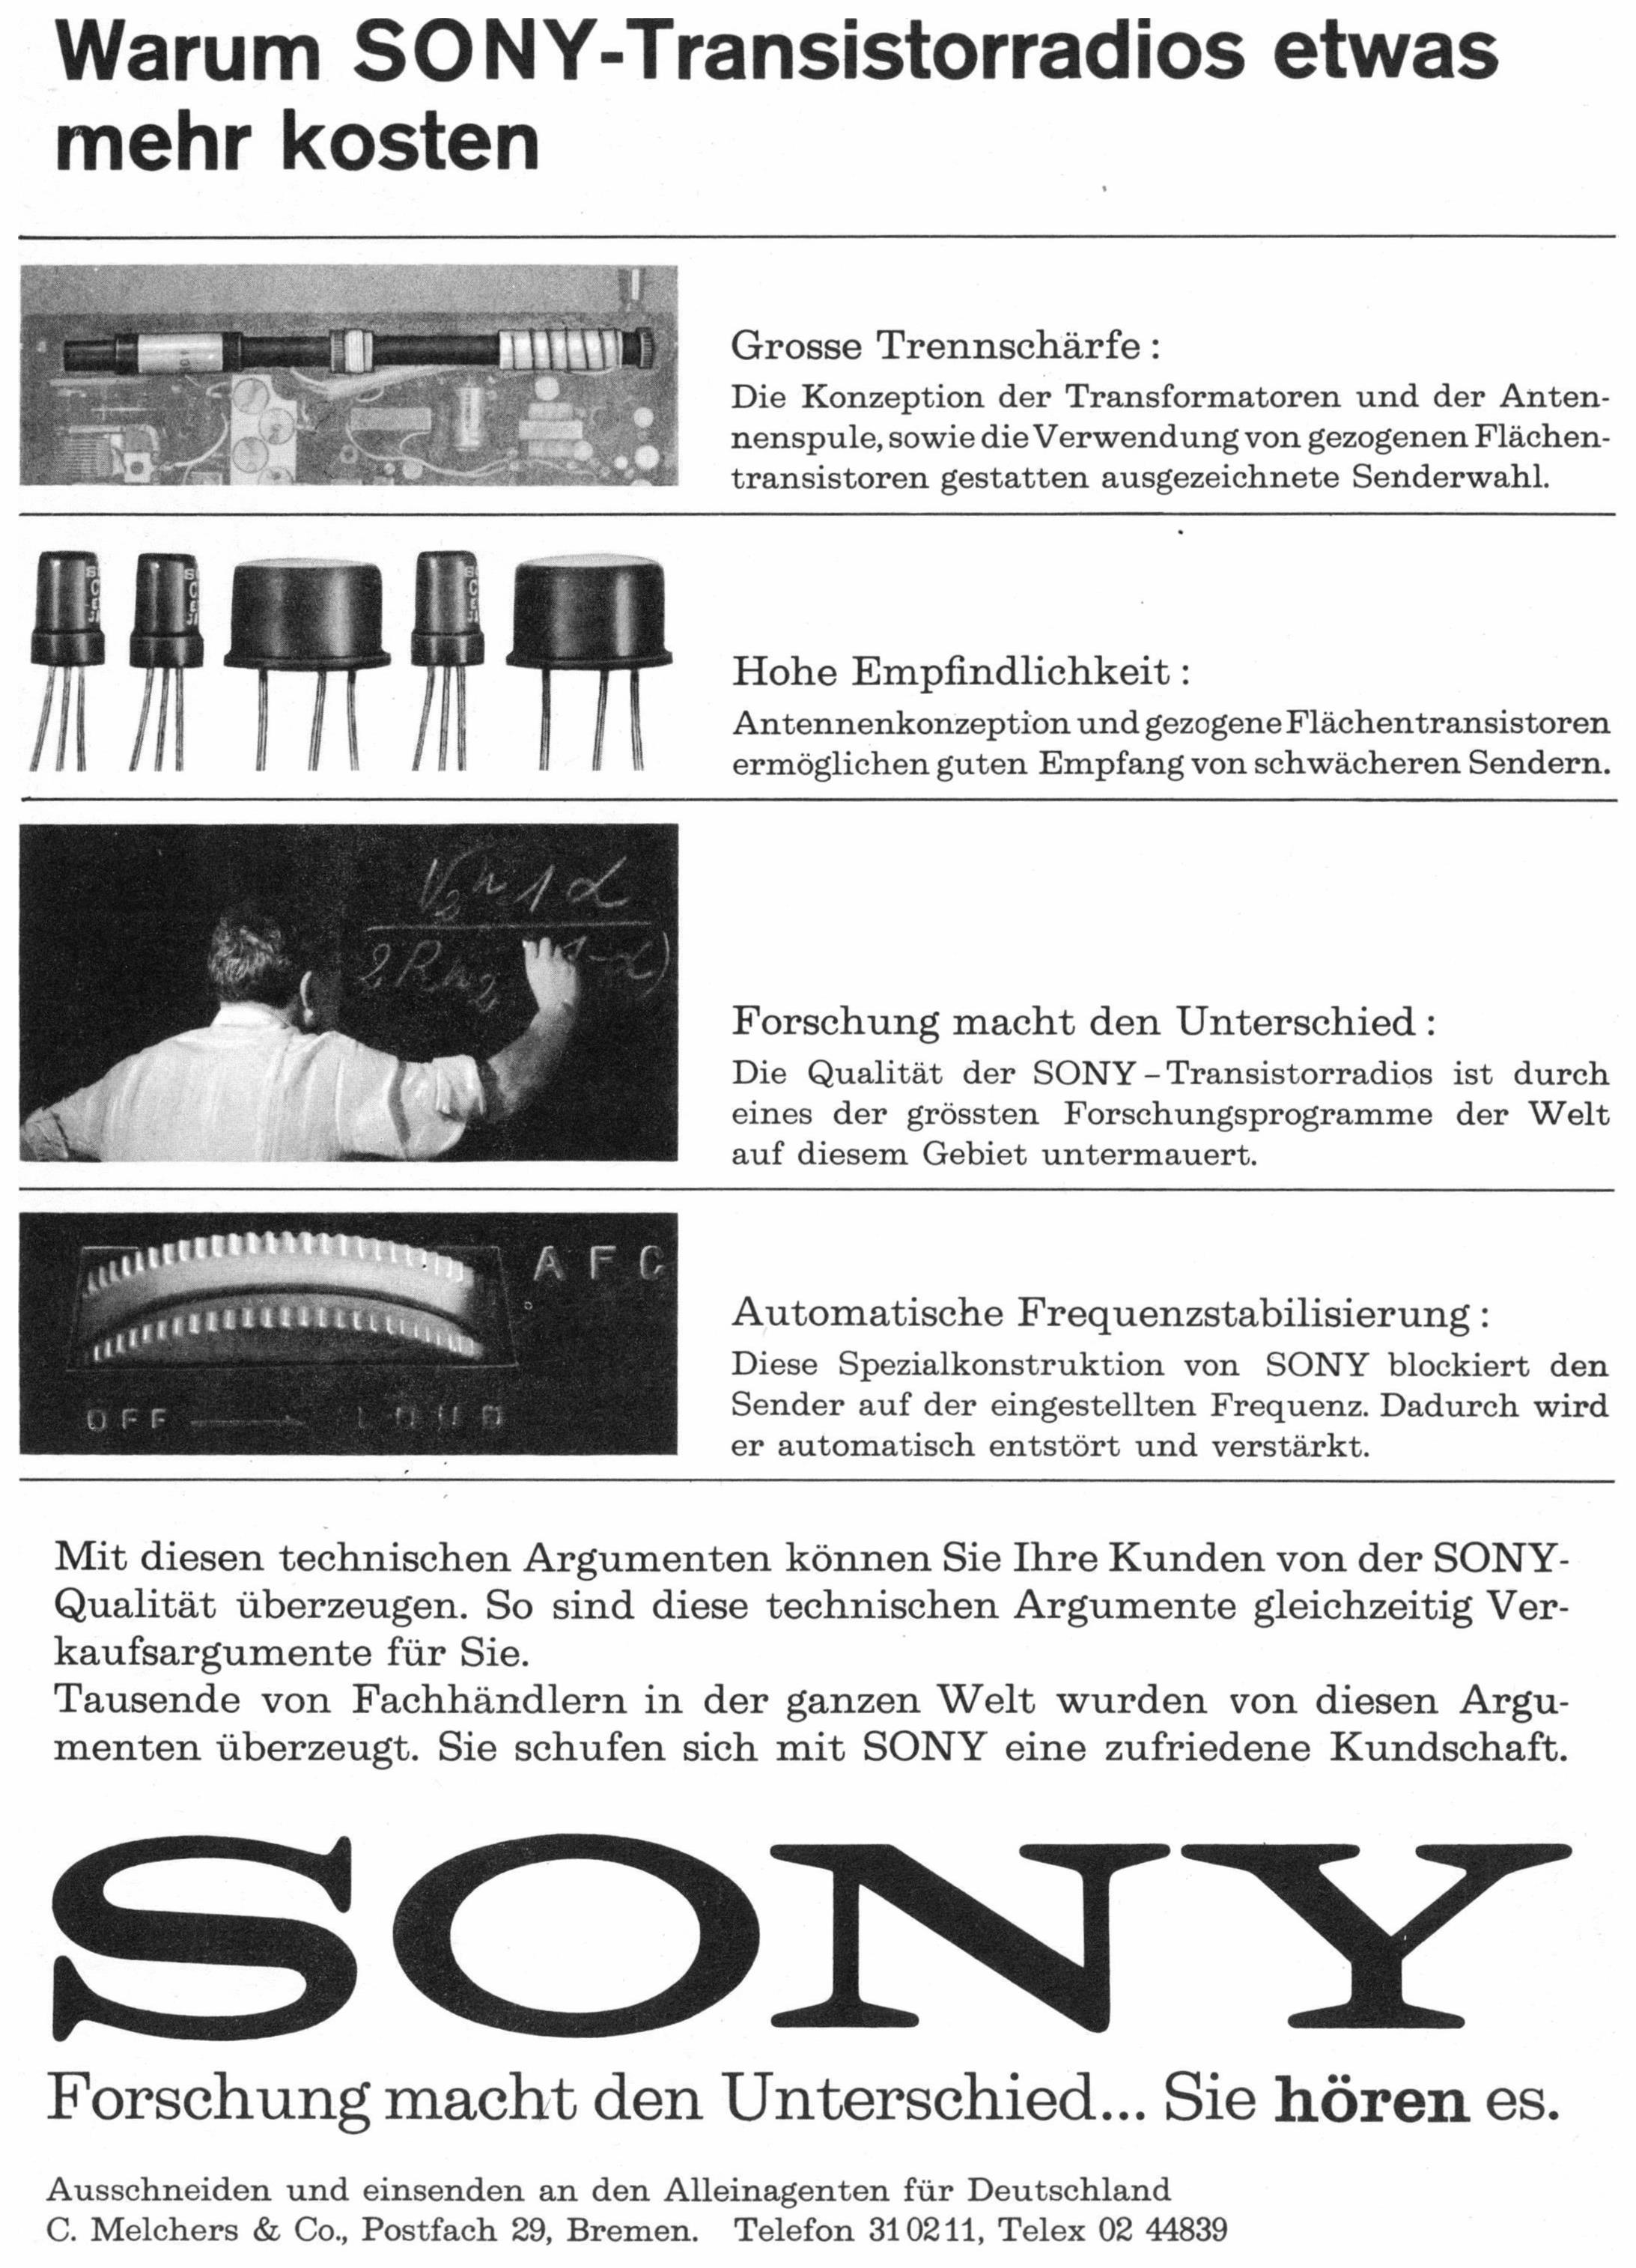 Sony 1962 03.jpg